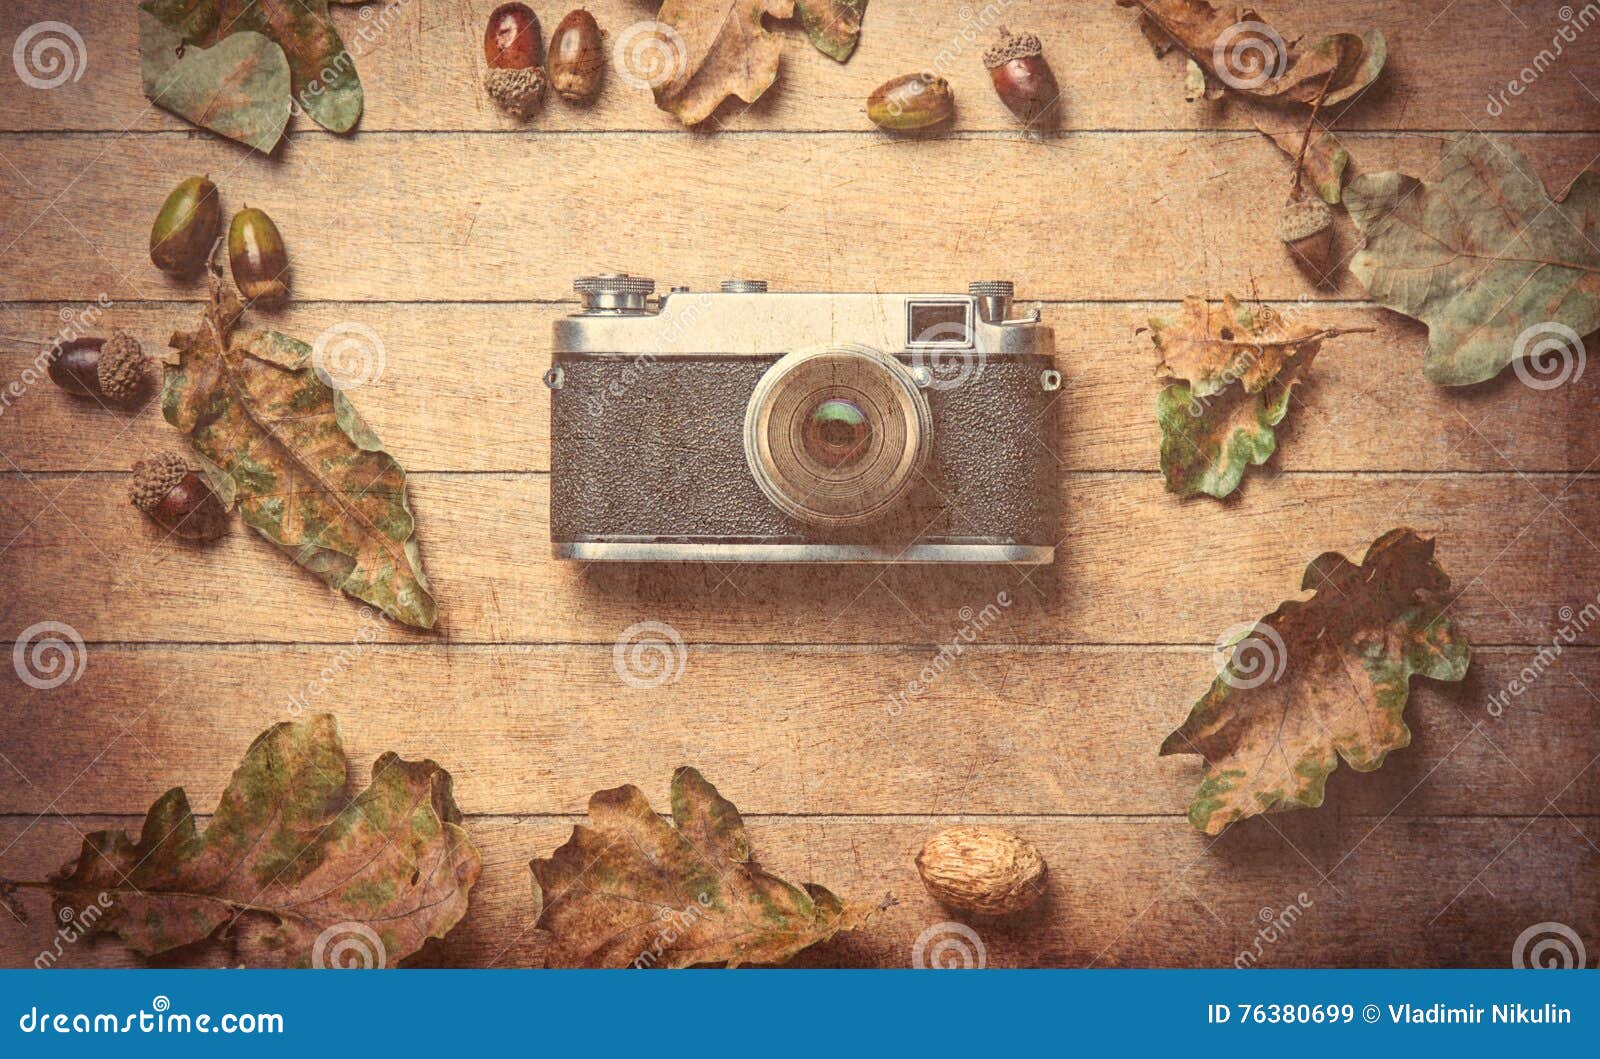 fallen leaf webcam